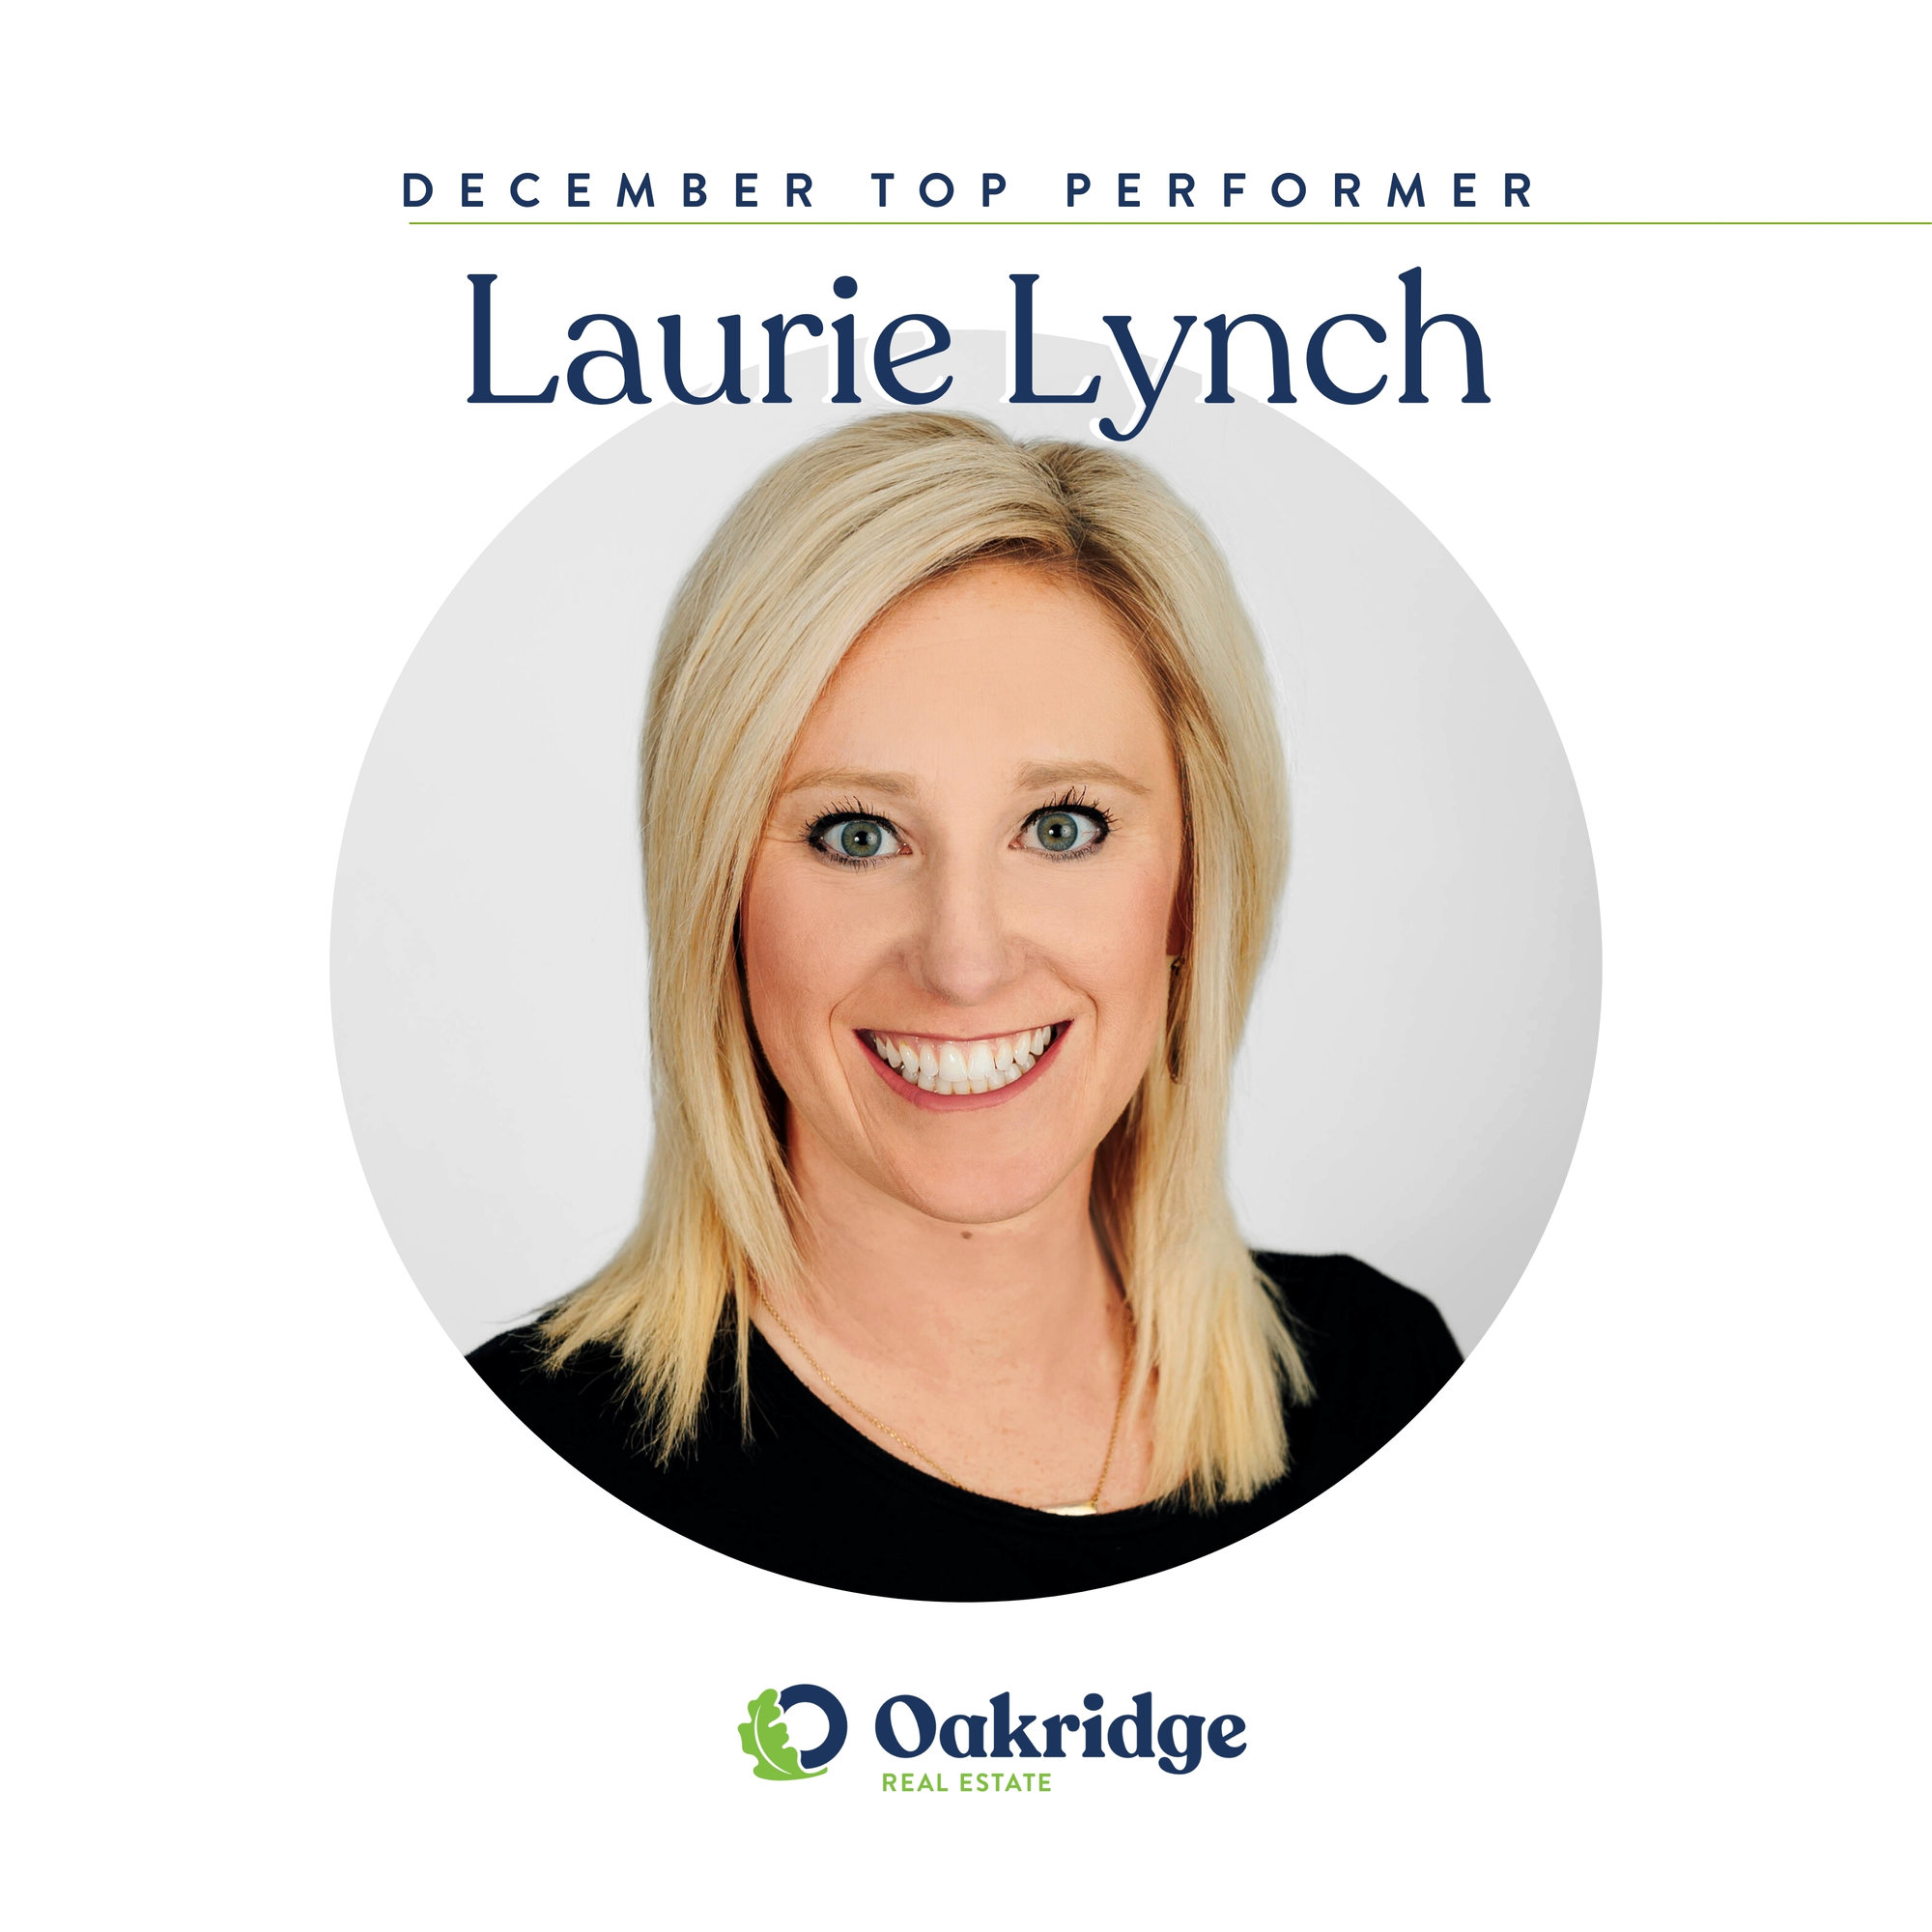 laurie lynch oakridge real estate december top performer 